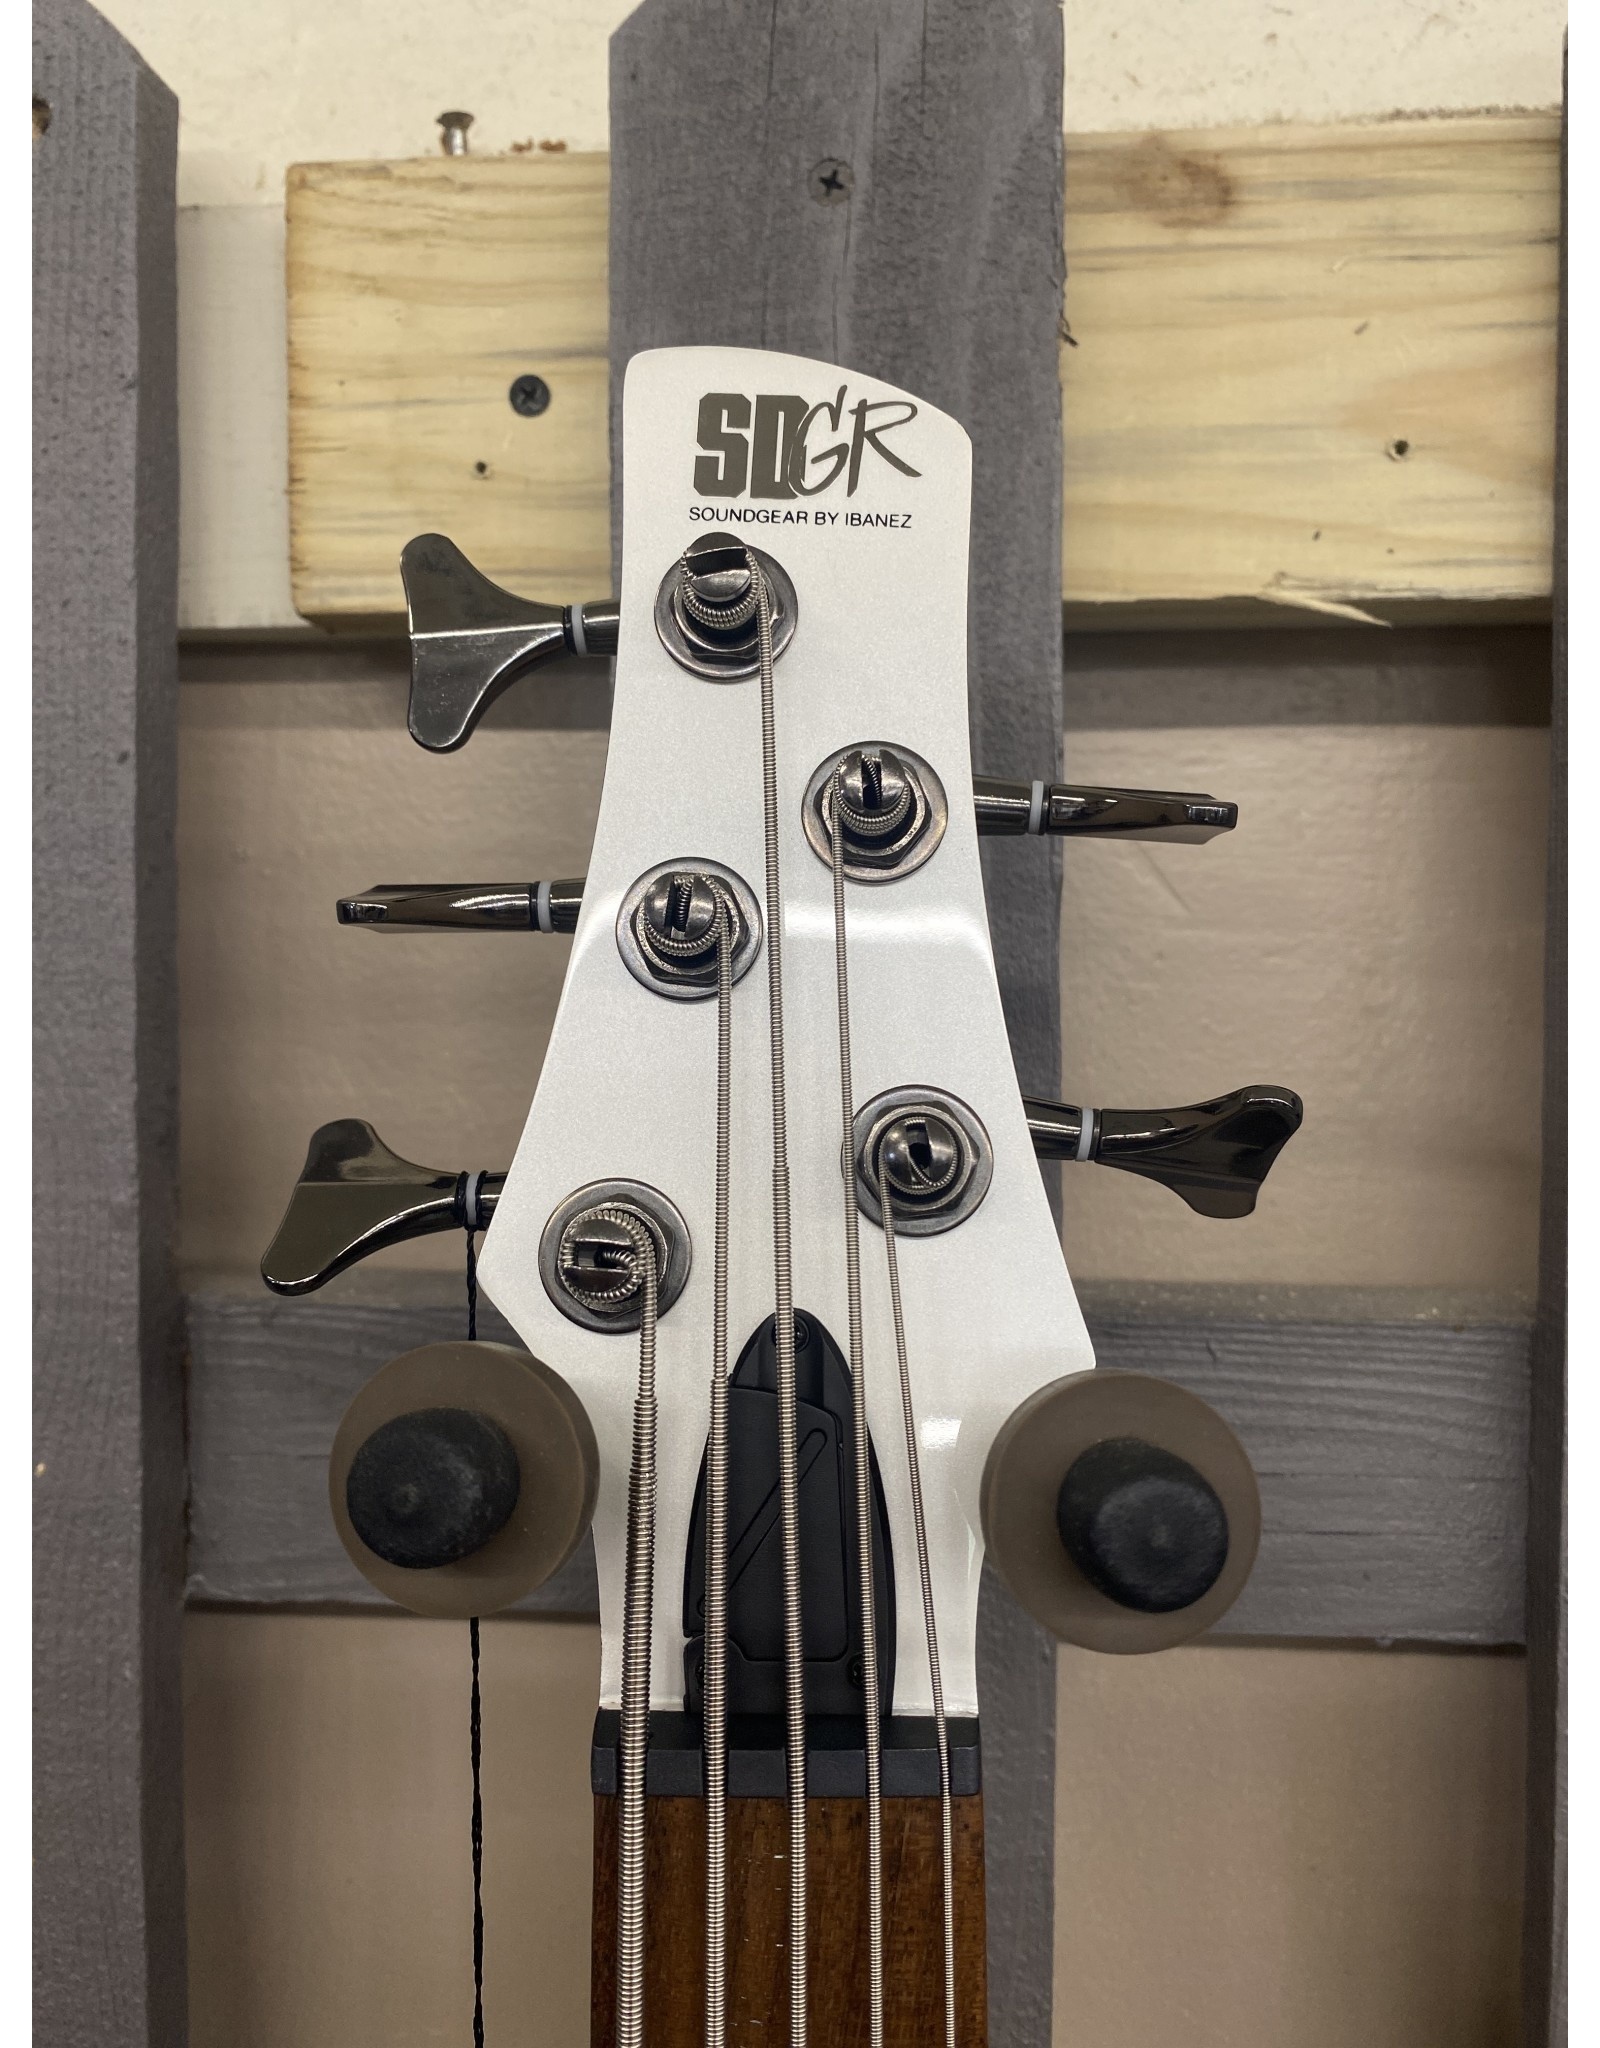 Ibanez Ibanez SR305E SR Standard 5-String Bass Pearl White